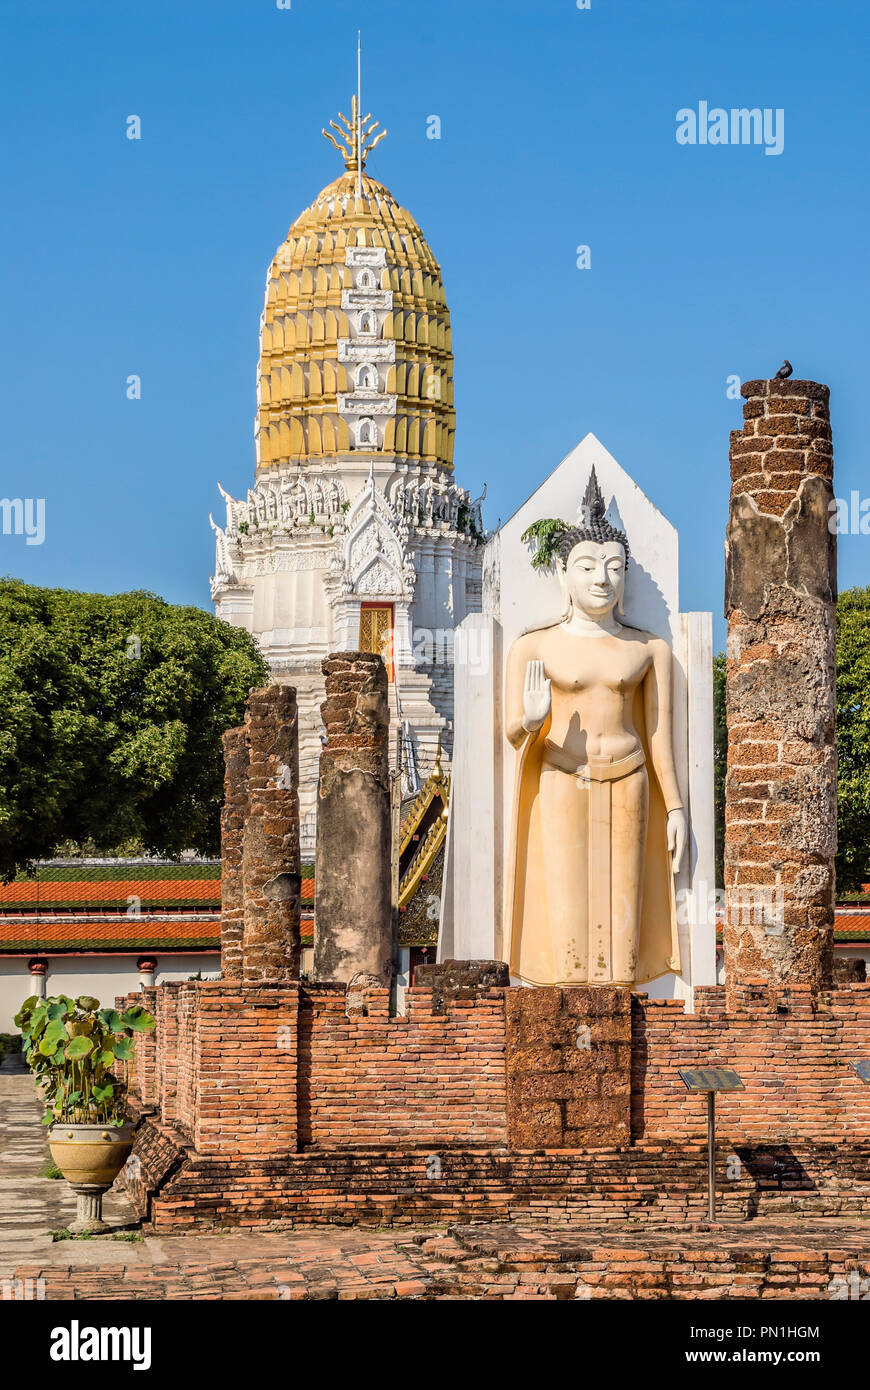 Wat Phra Sri Rattana Mahathat, Phitsanulok, Thailand Stock Photo